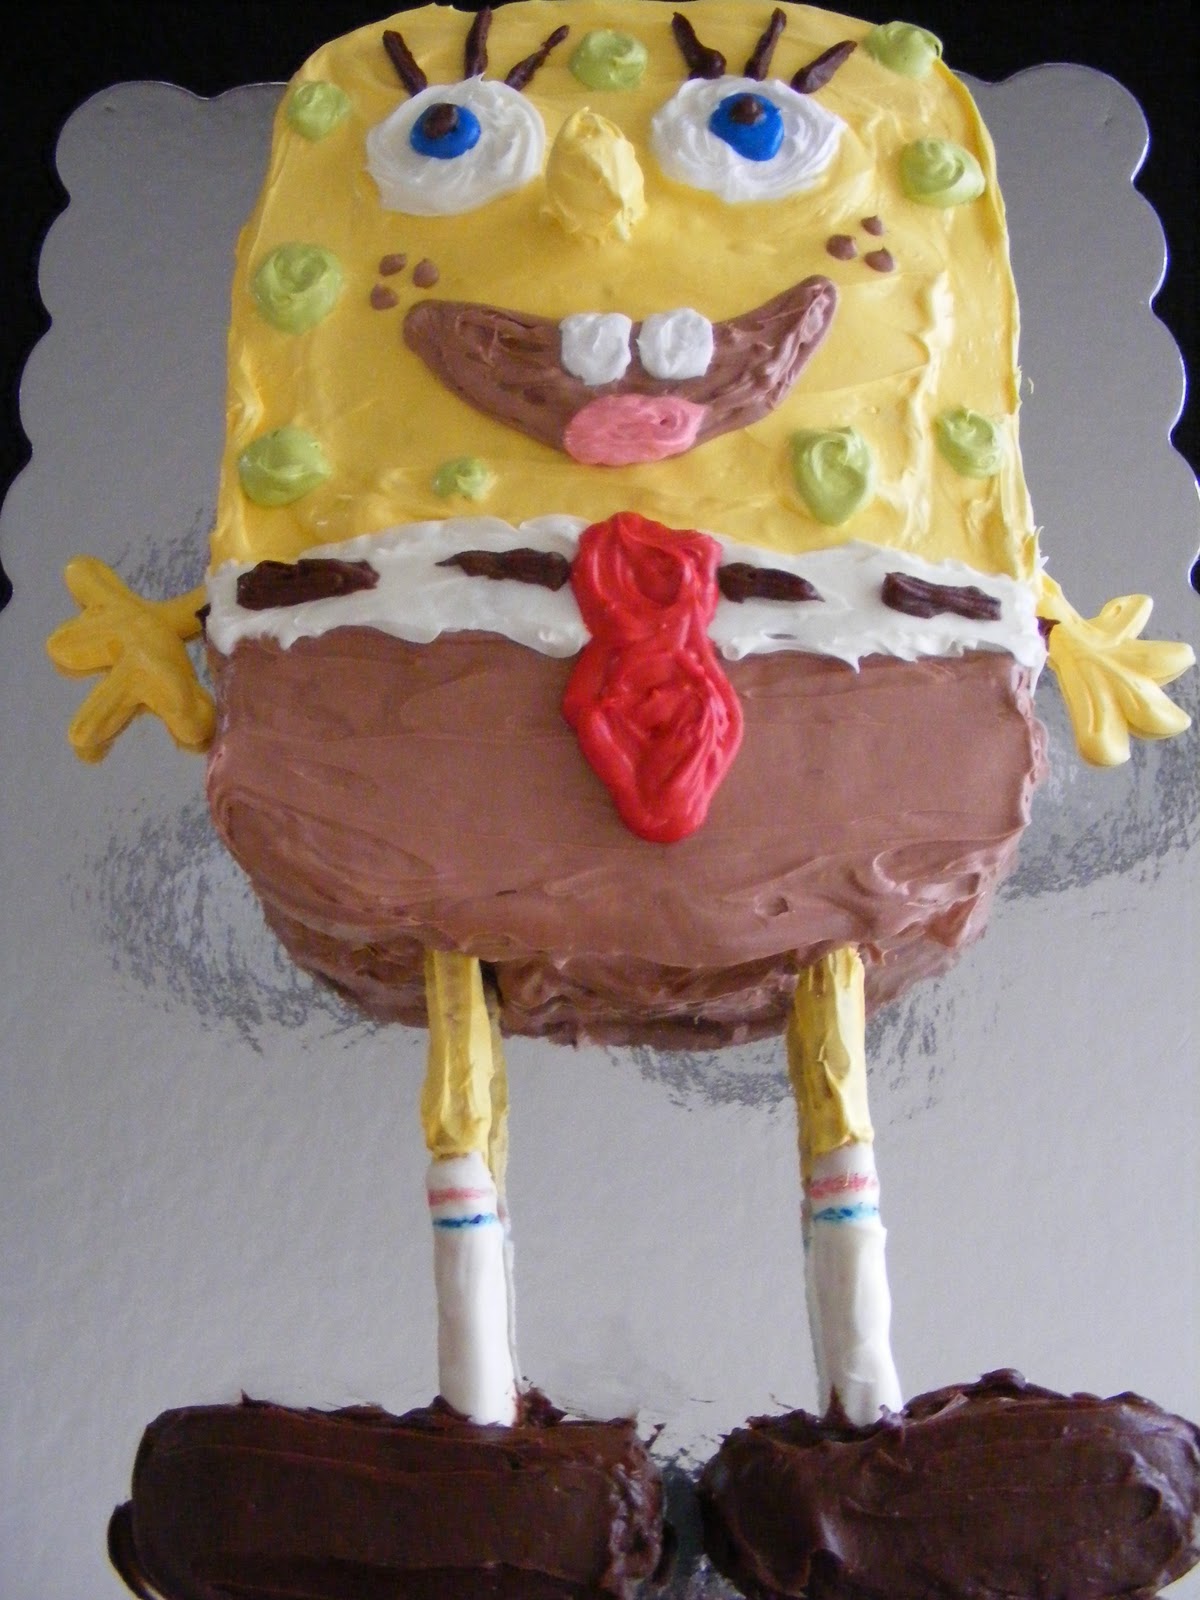 Bad Spongebob Cake